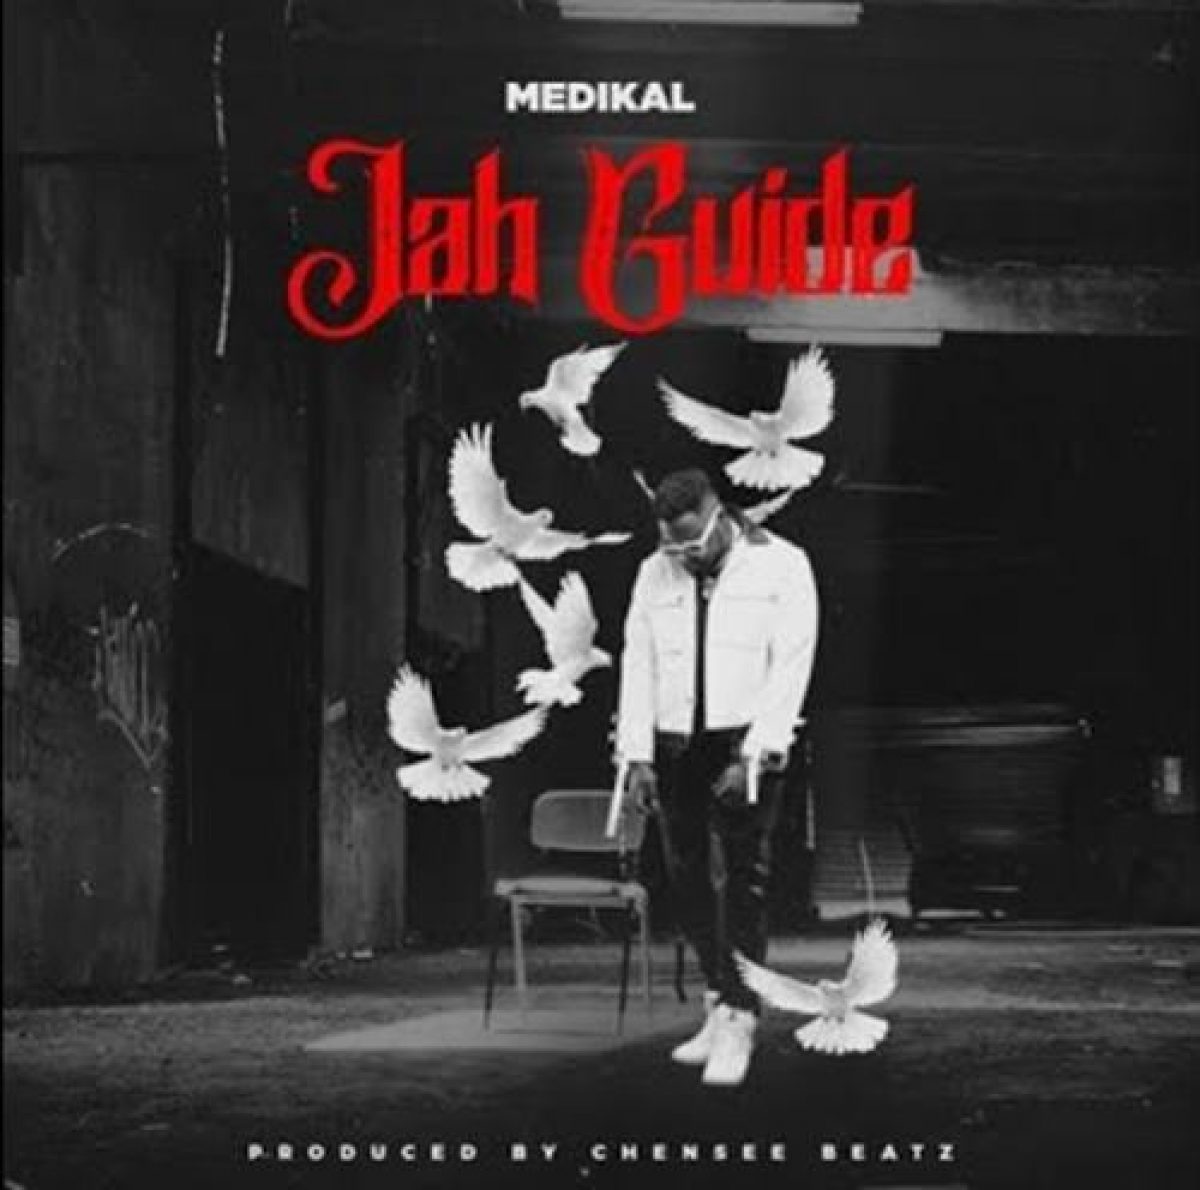 Medikal - Jah Guide (Prod. By Chensee Beatz) 1